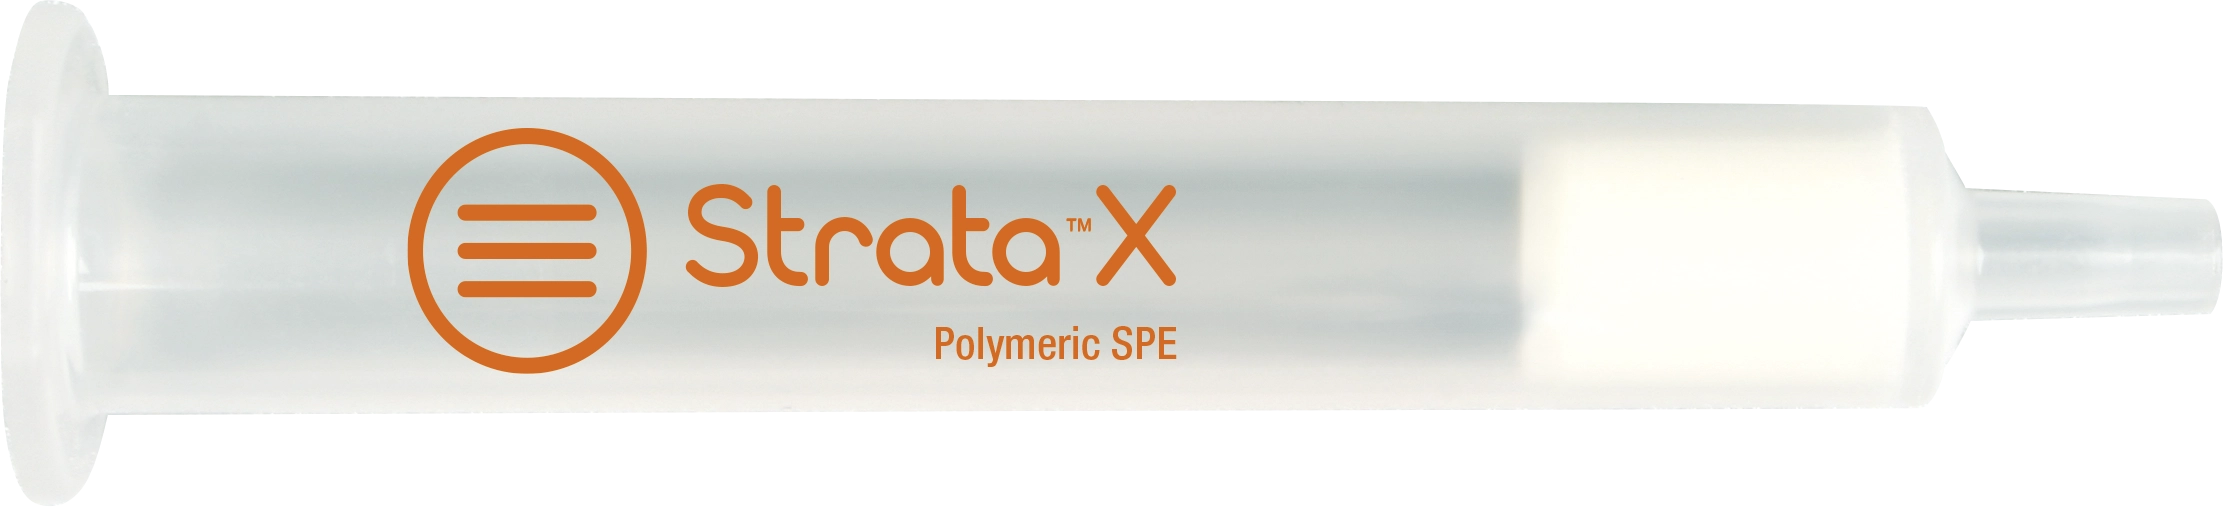 Enviro tox water testing using Strata SPE